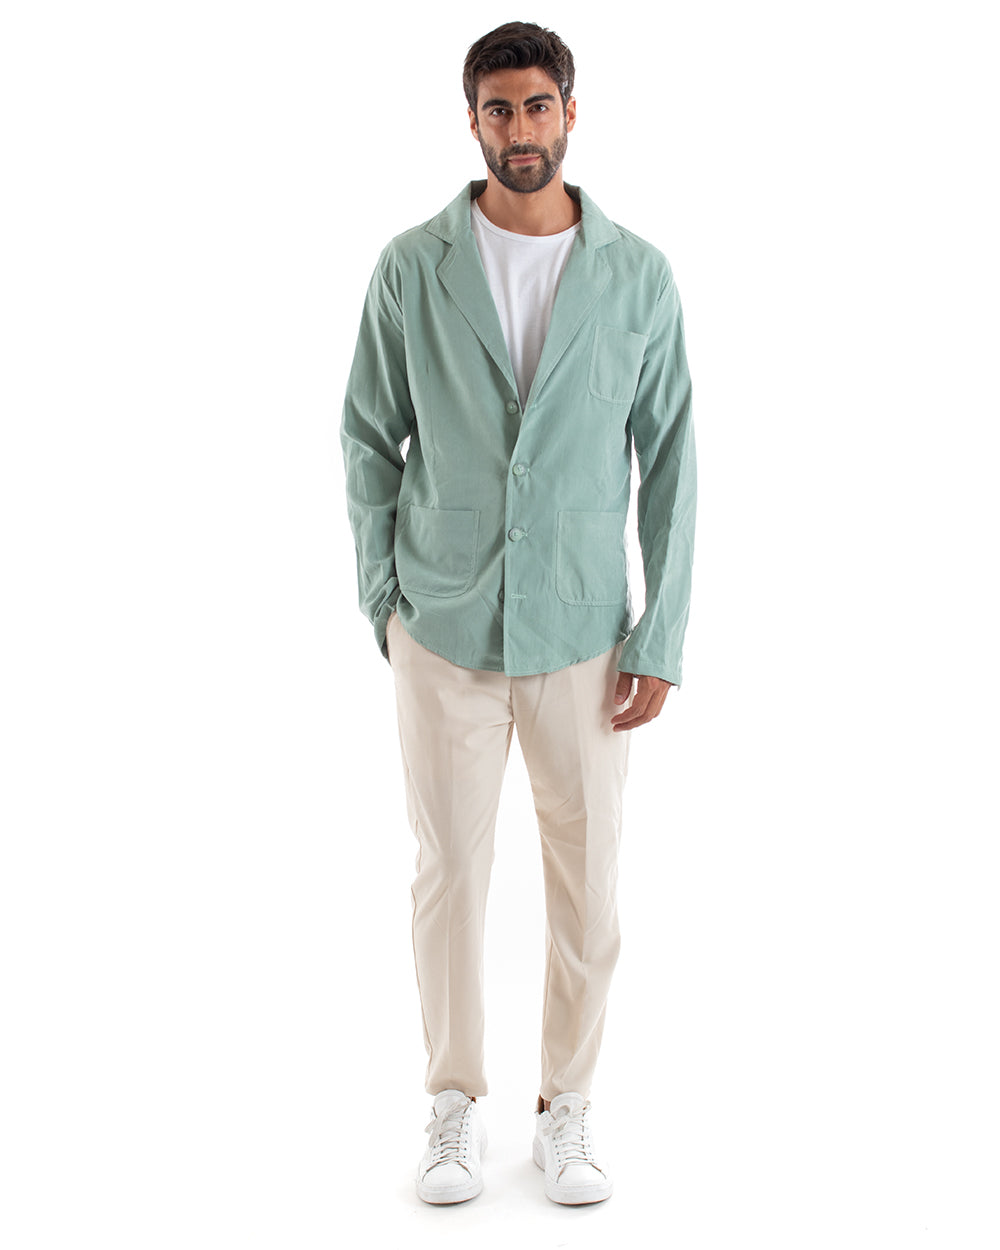 Camicia Uomo Con Colletto Giacca Sahariana Manica Lunga Cotone Verde Acqua GIOSAL-C2458A